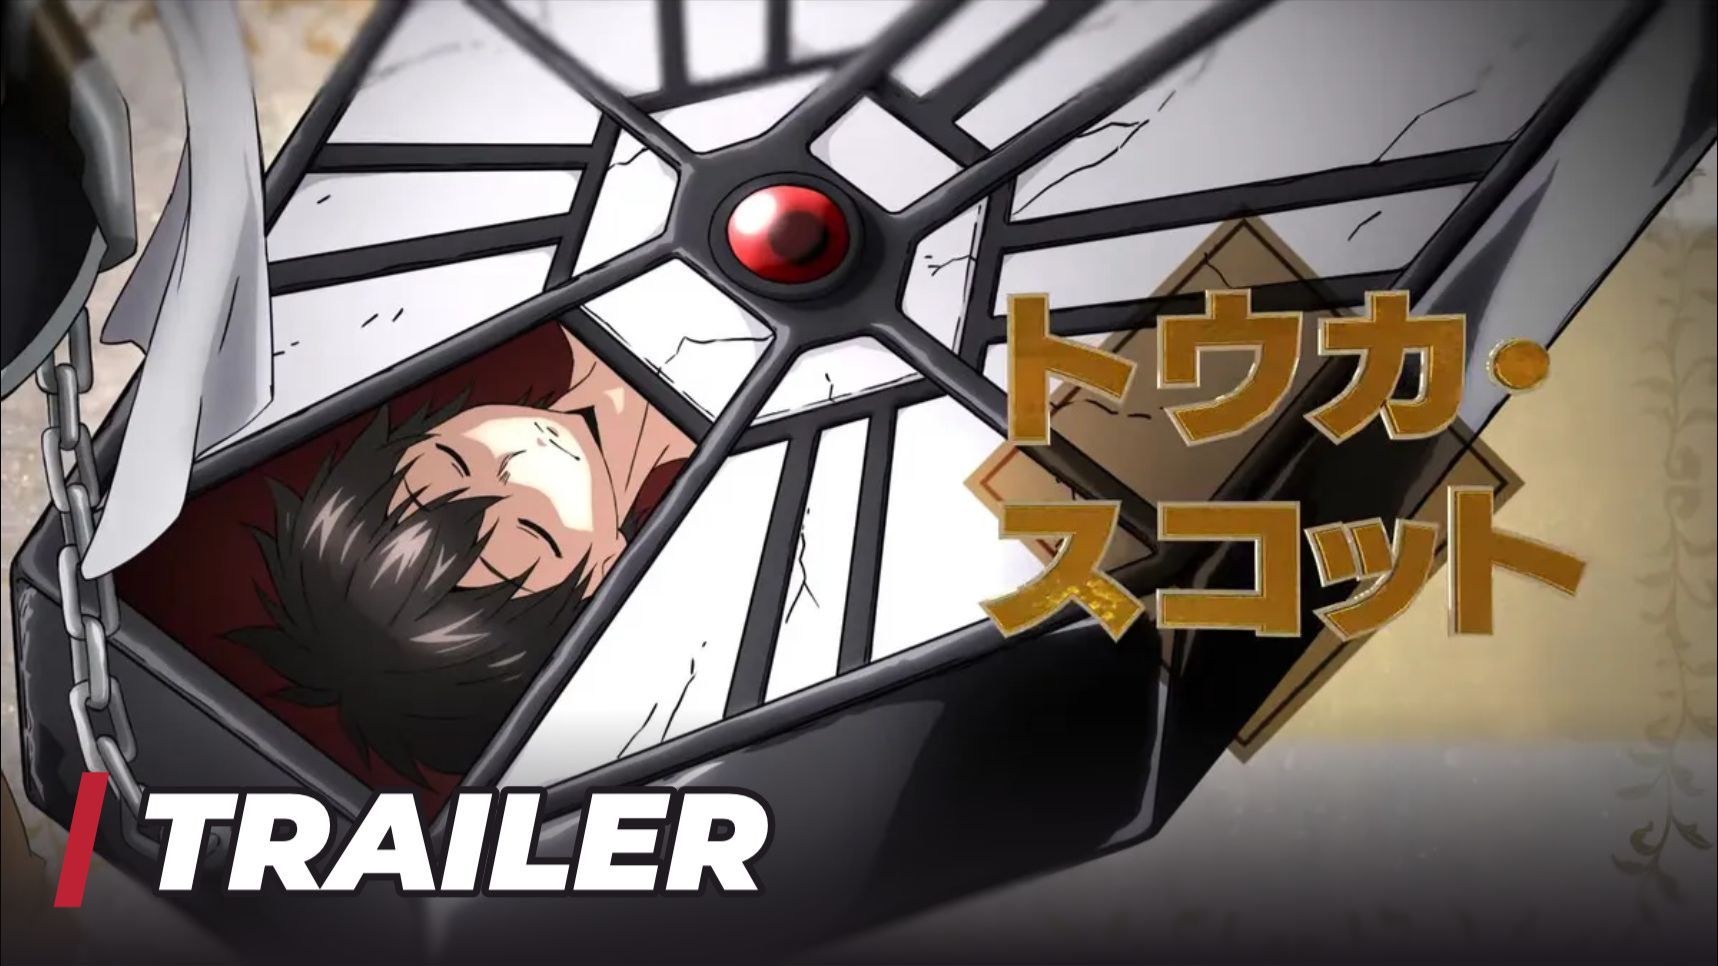 Yuusha ga Shinda! (The Legendary Hero Is Dead!) Trailer 